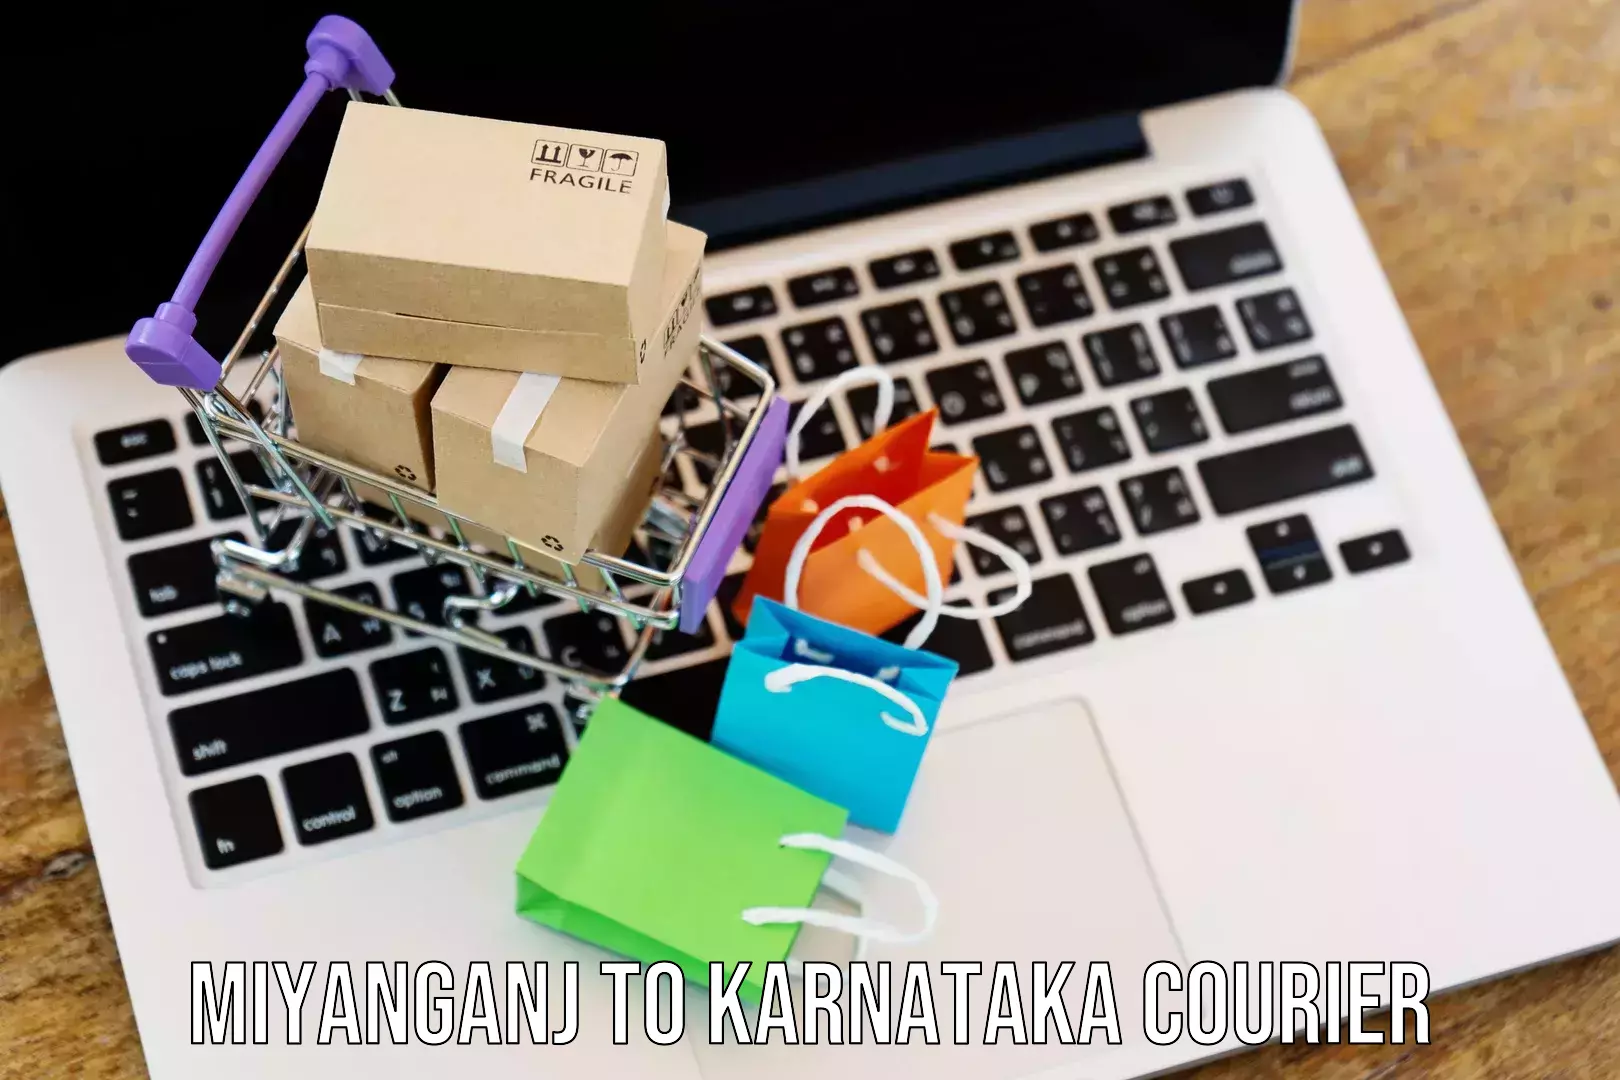 Local delivery service Miyanganj to Karnataka